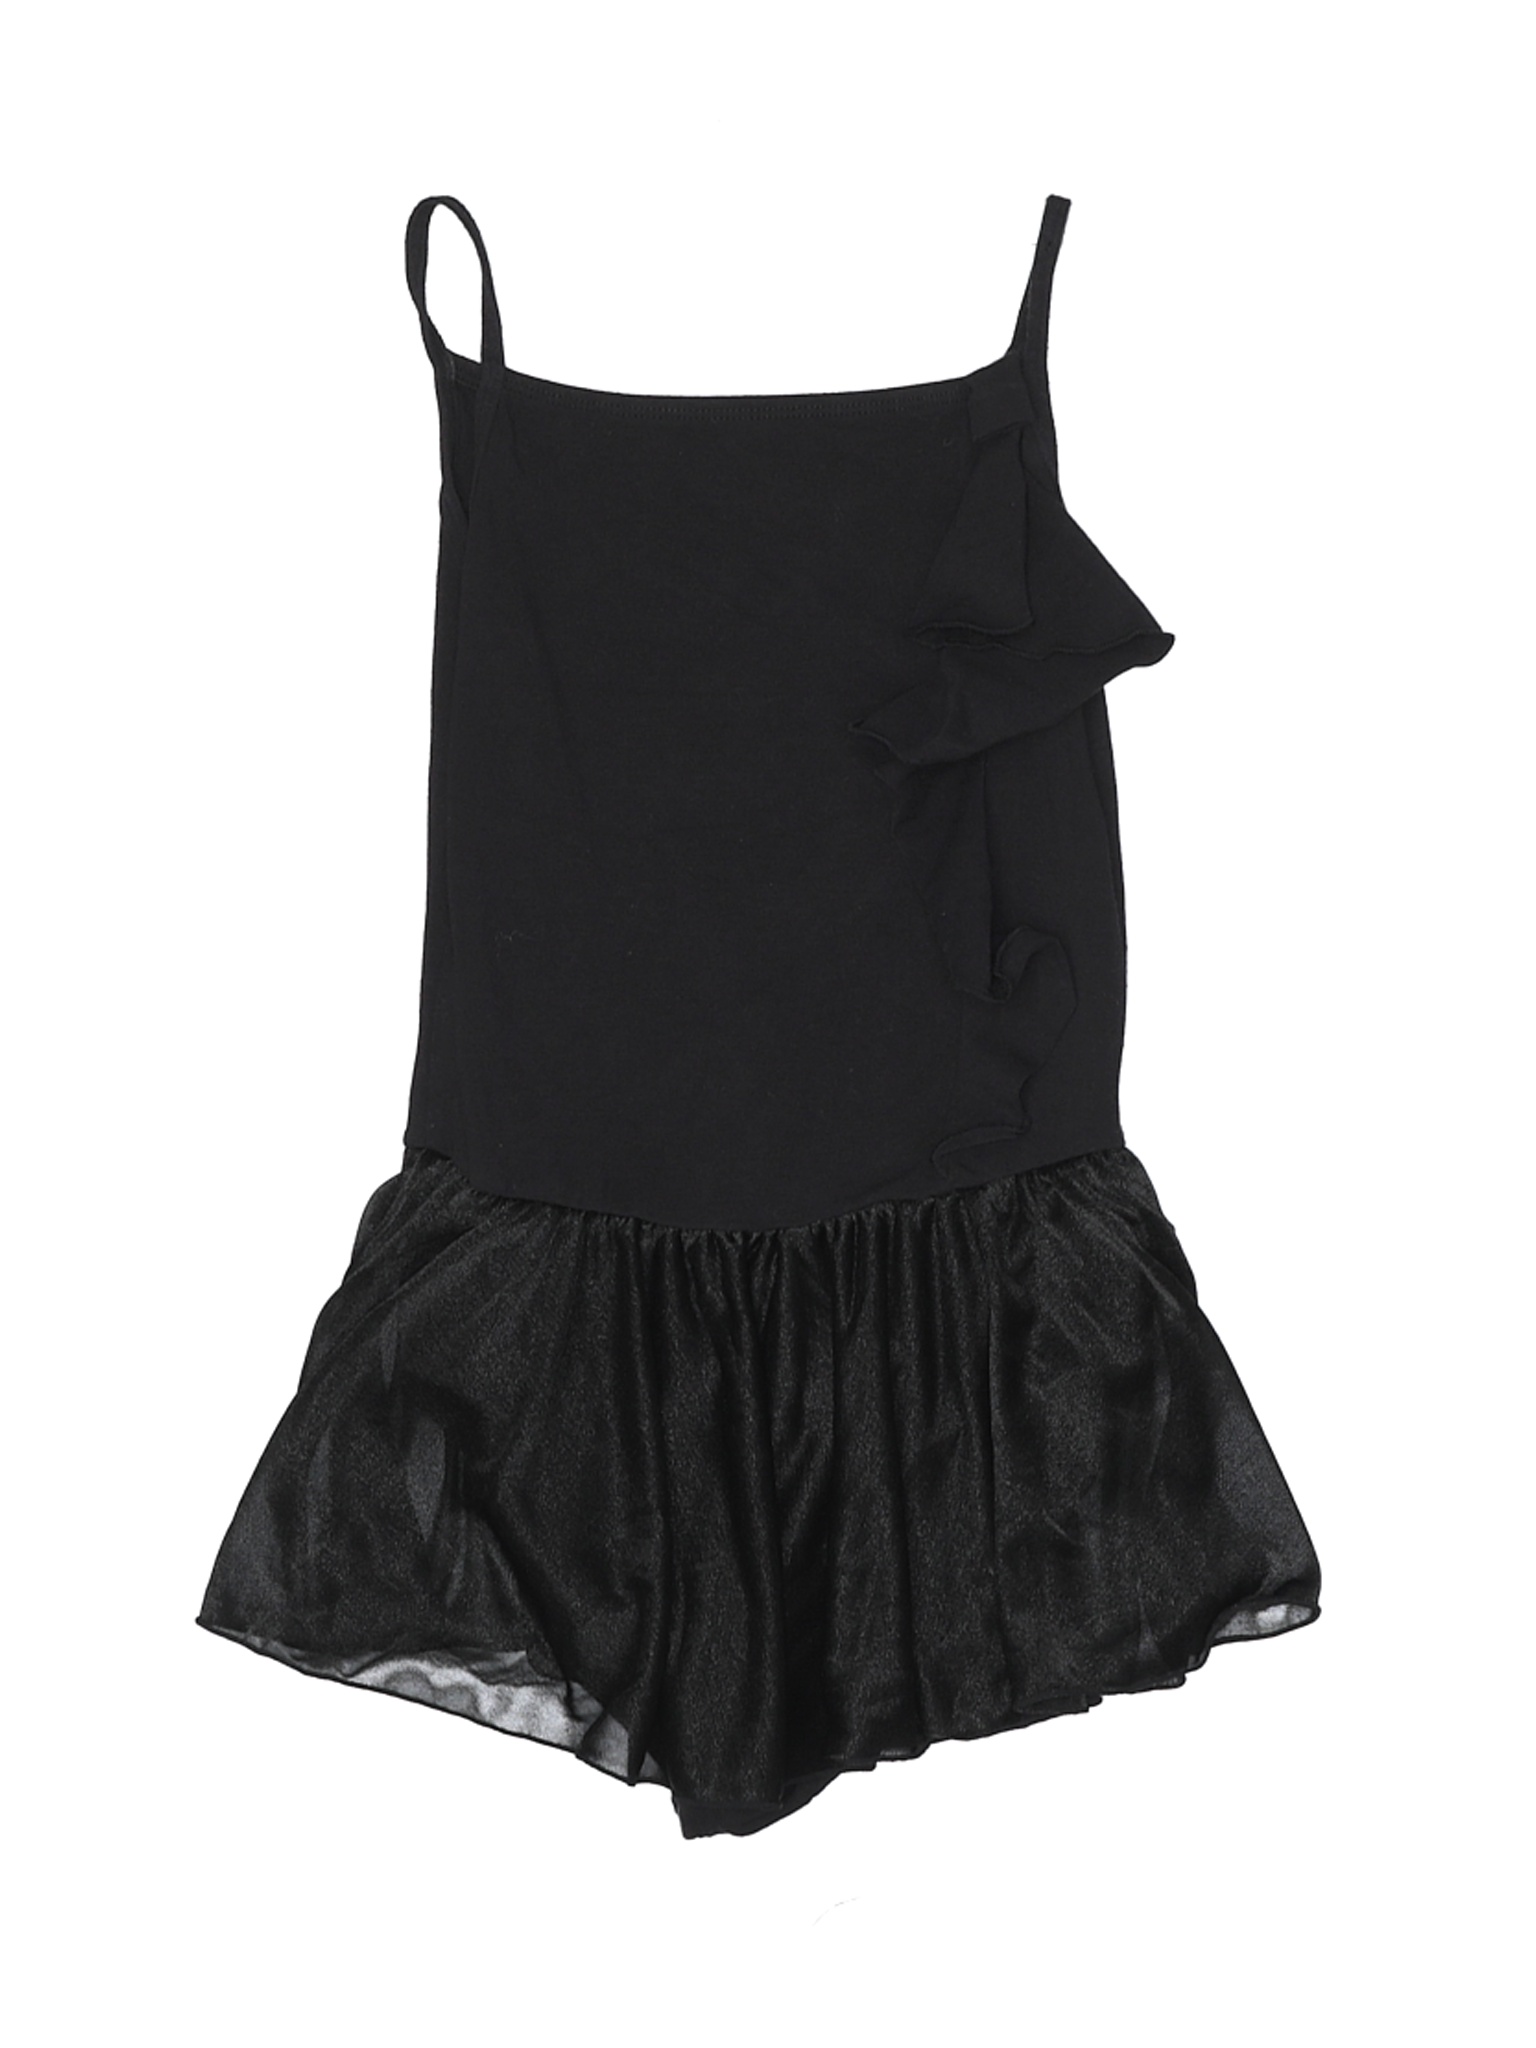 Freestyle Girls Black Dress 10 | eBay